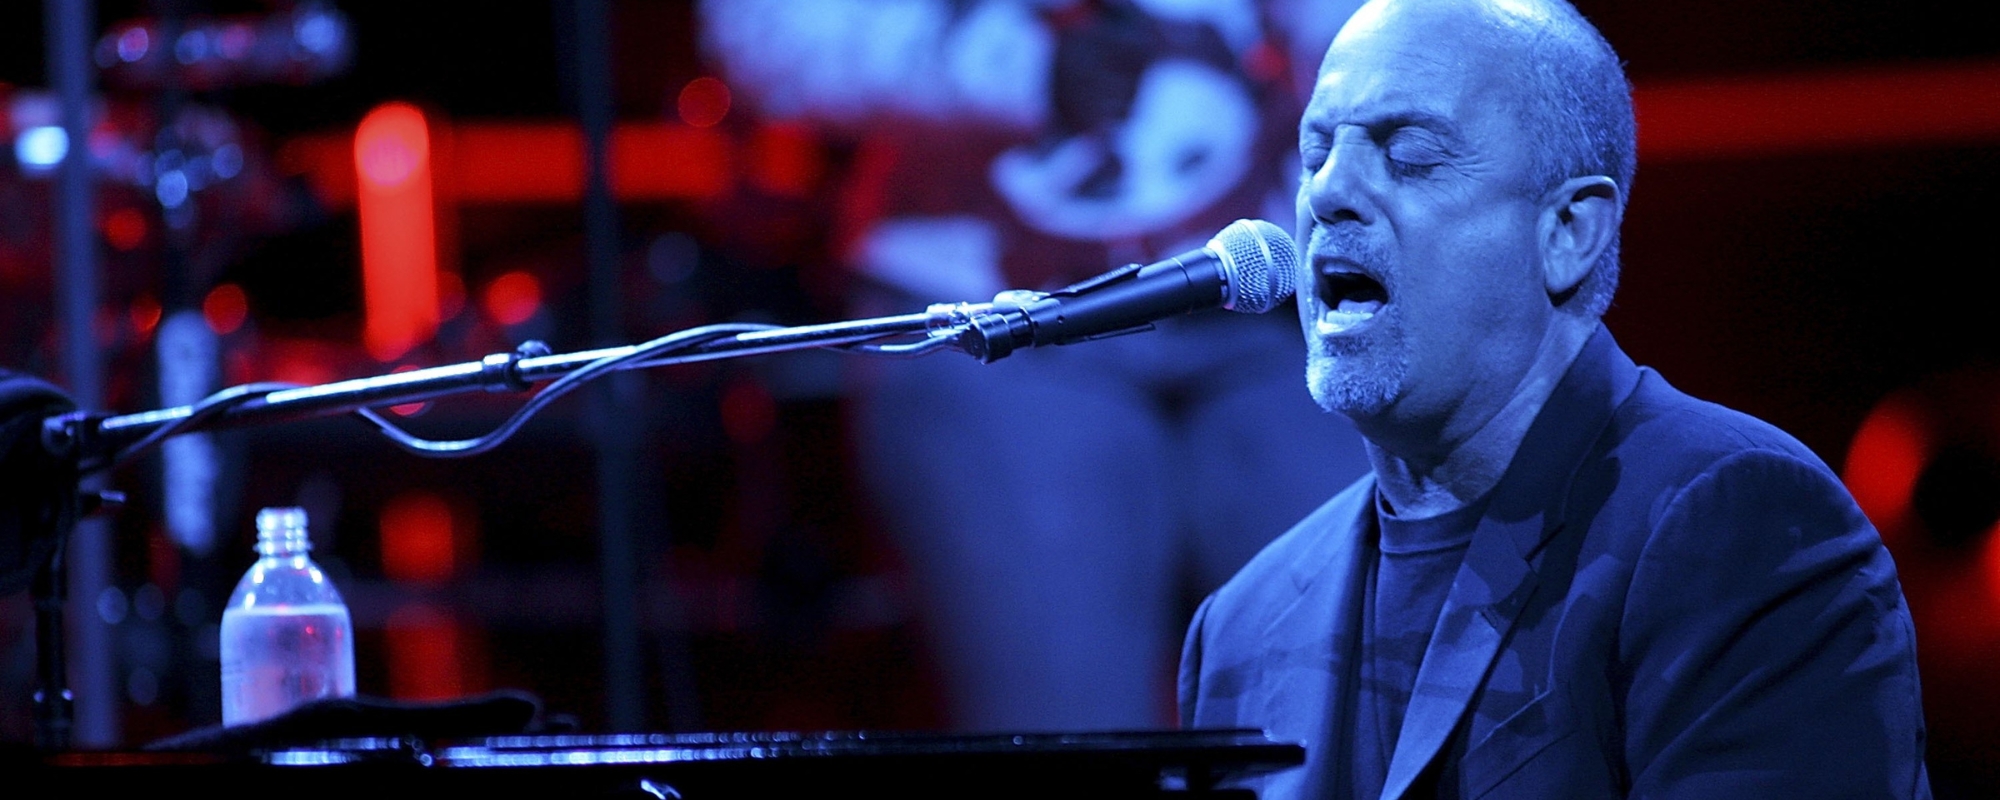 Watch the Full Billy Joel Performance of “Piano Man” That CBS Cut Short